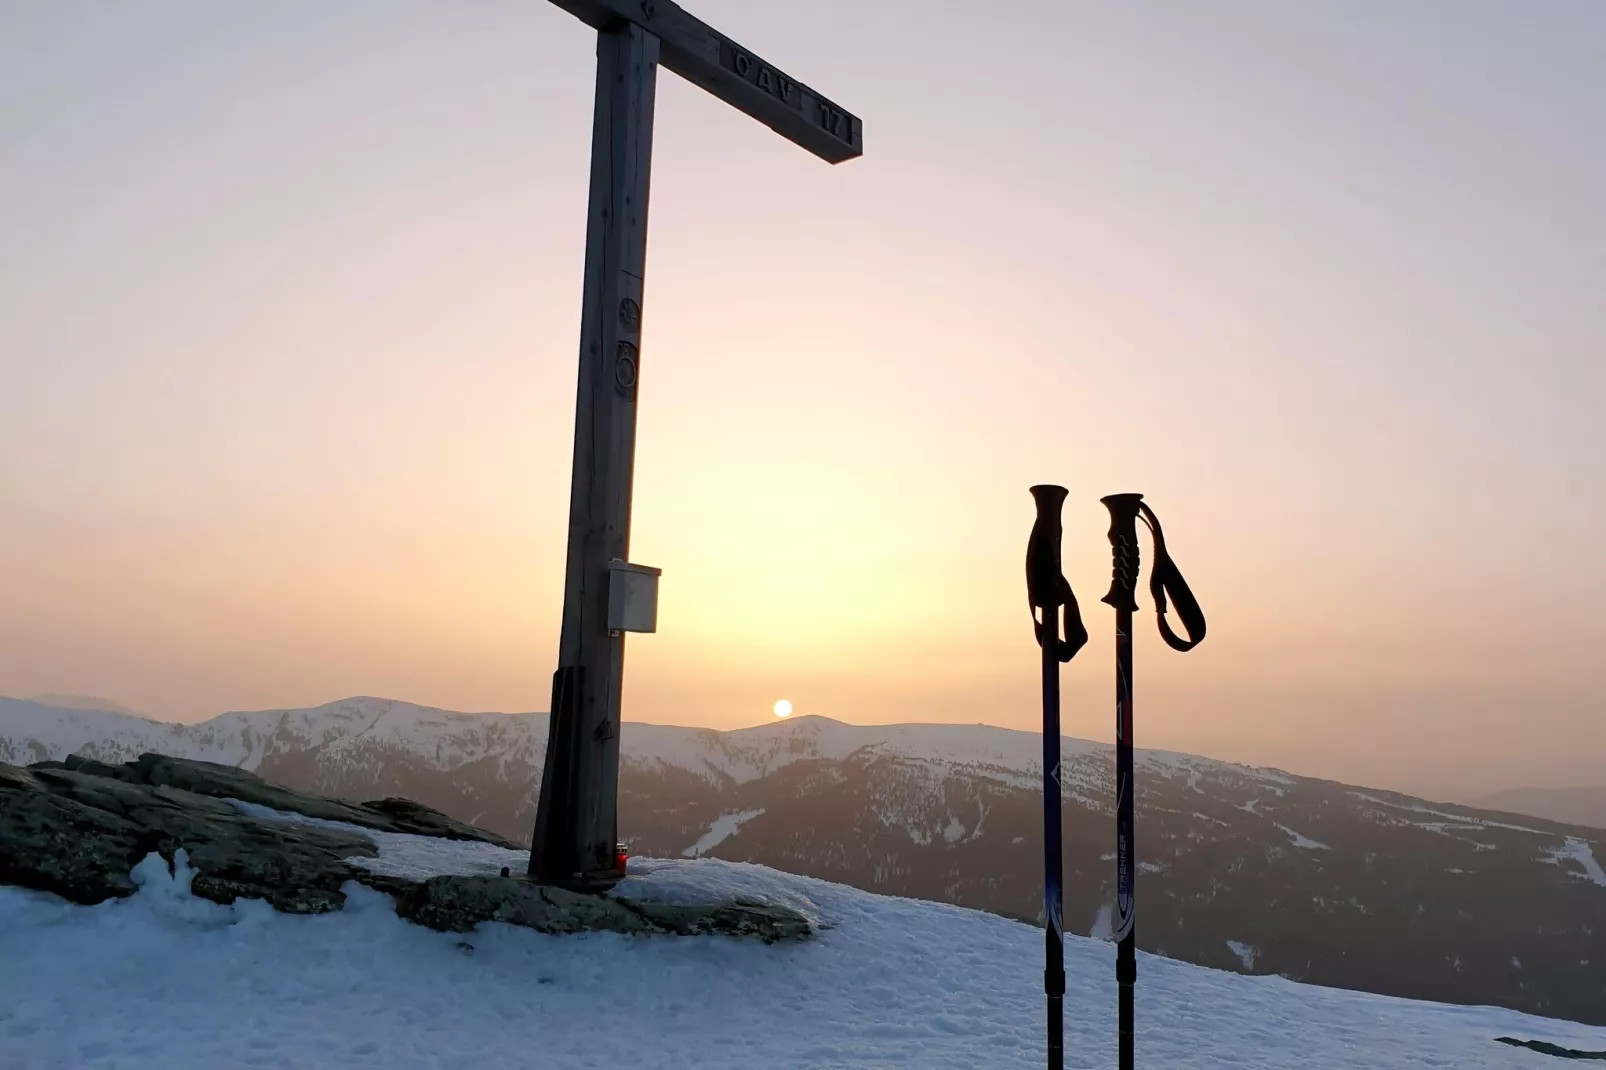 Schneiderhütte-Gebied winter 5km